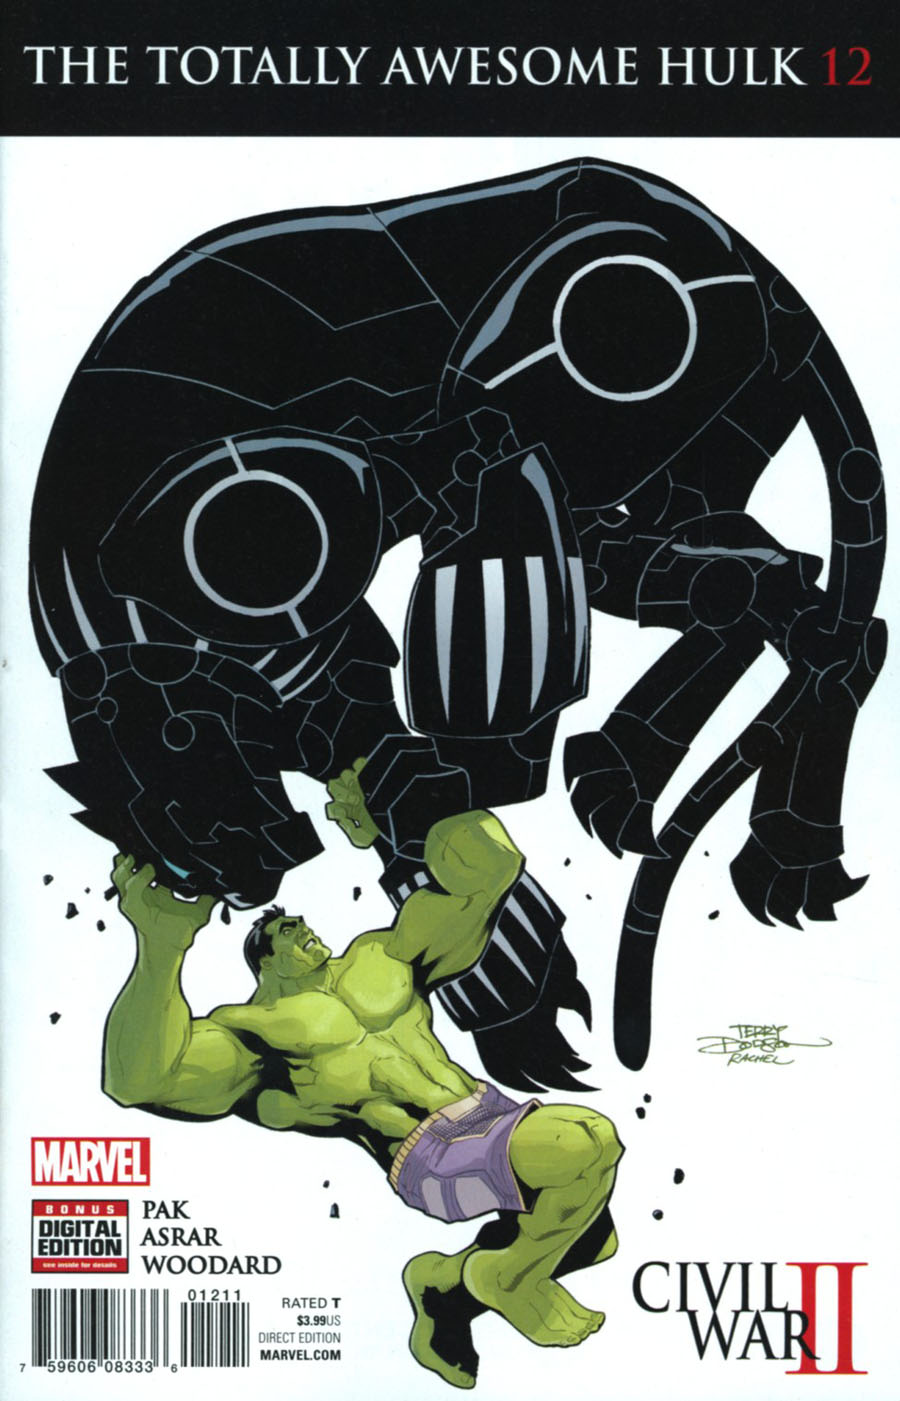 Totally Awesome Hulk #12 (Civil War II Tie-In)